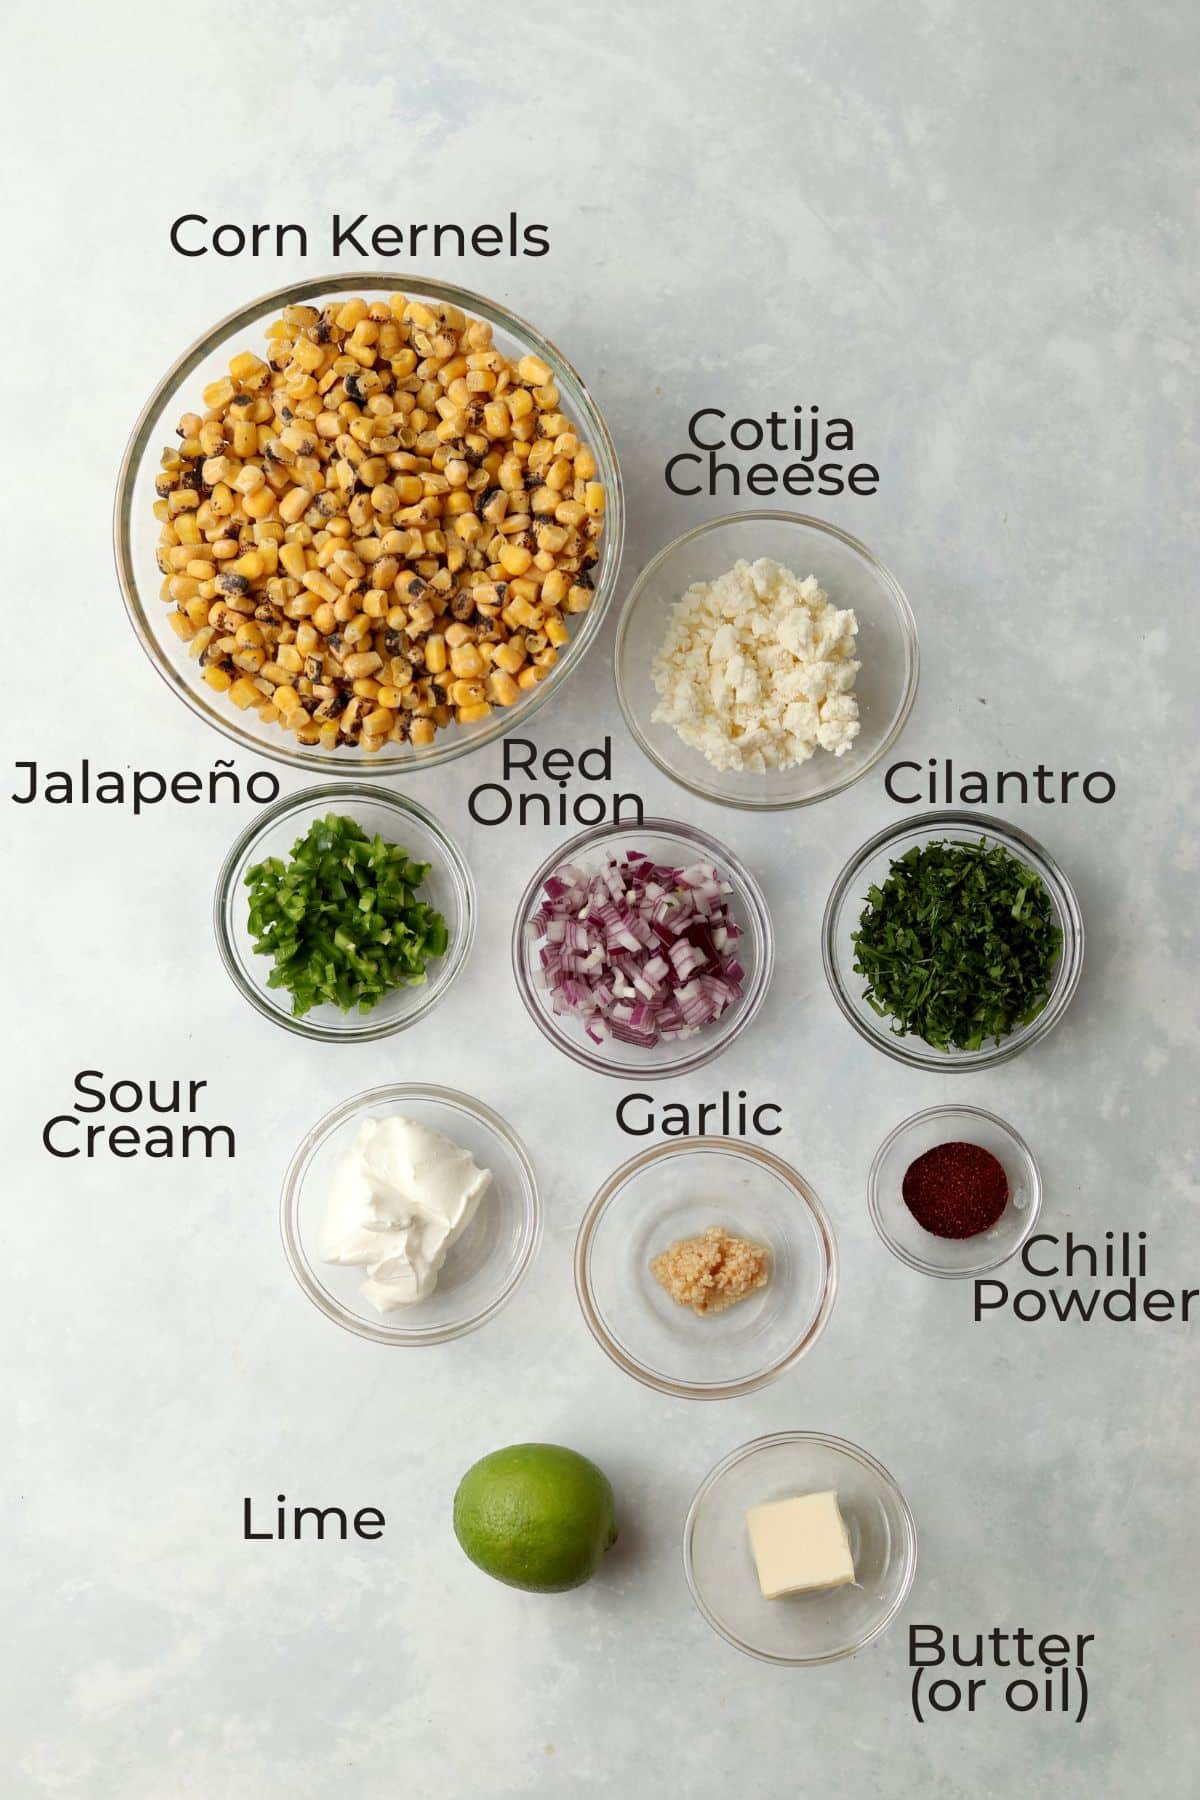 frozen corn kernels, cotija cheese, jalapeño, red onion, cilantro, sour cream, garlic, chili powder, and lime in prep bowls